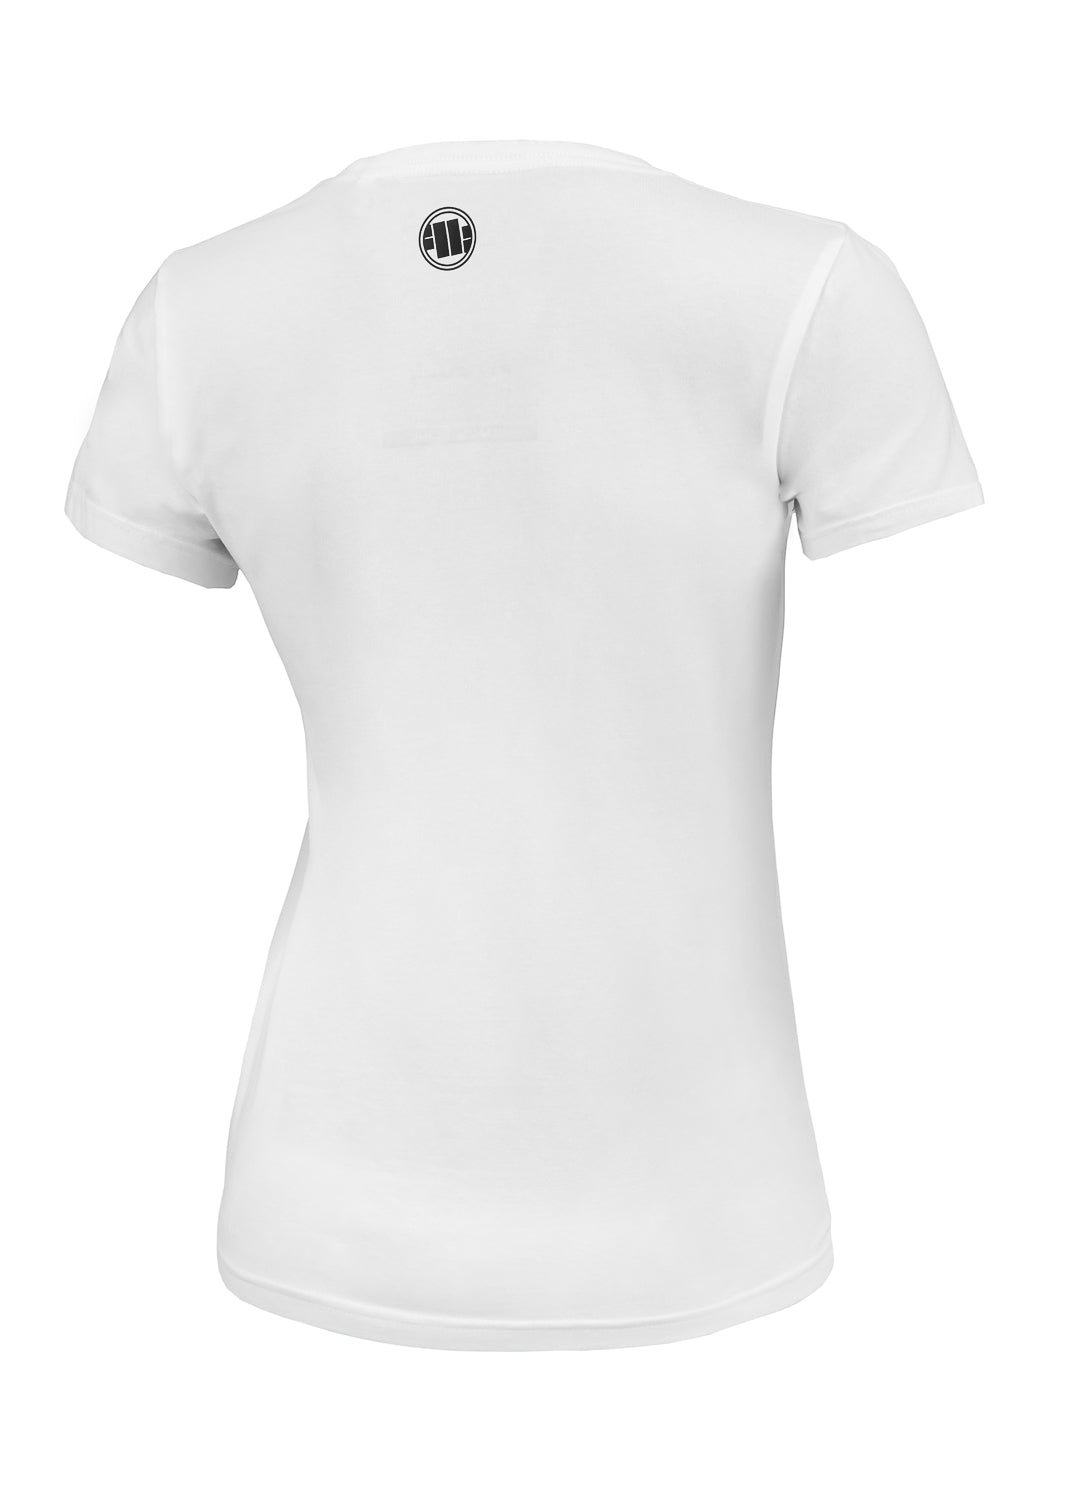 Women's T-shirt BOXING White - Pitbull West Coast International Store 